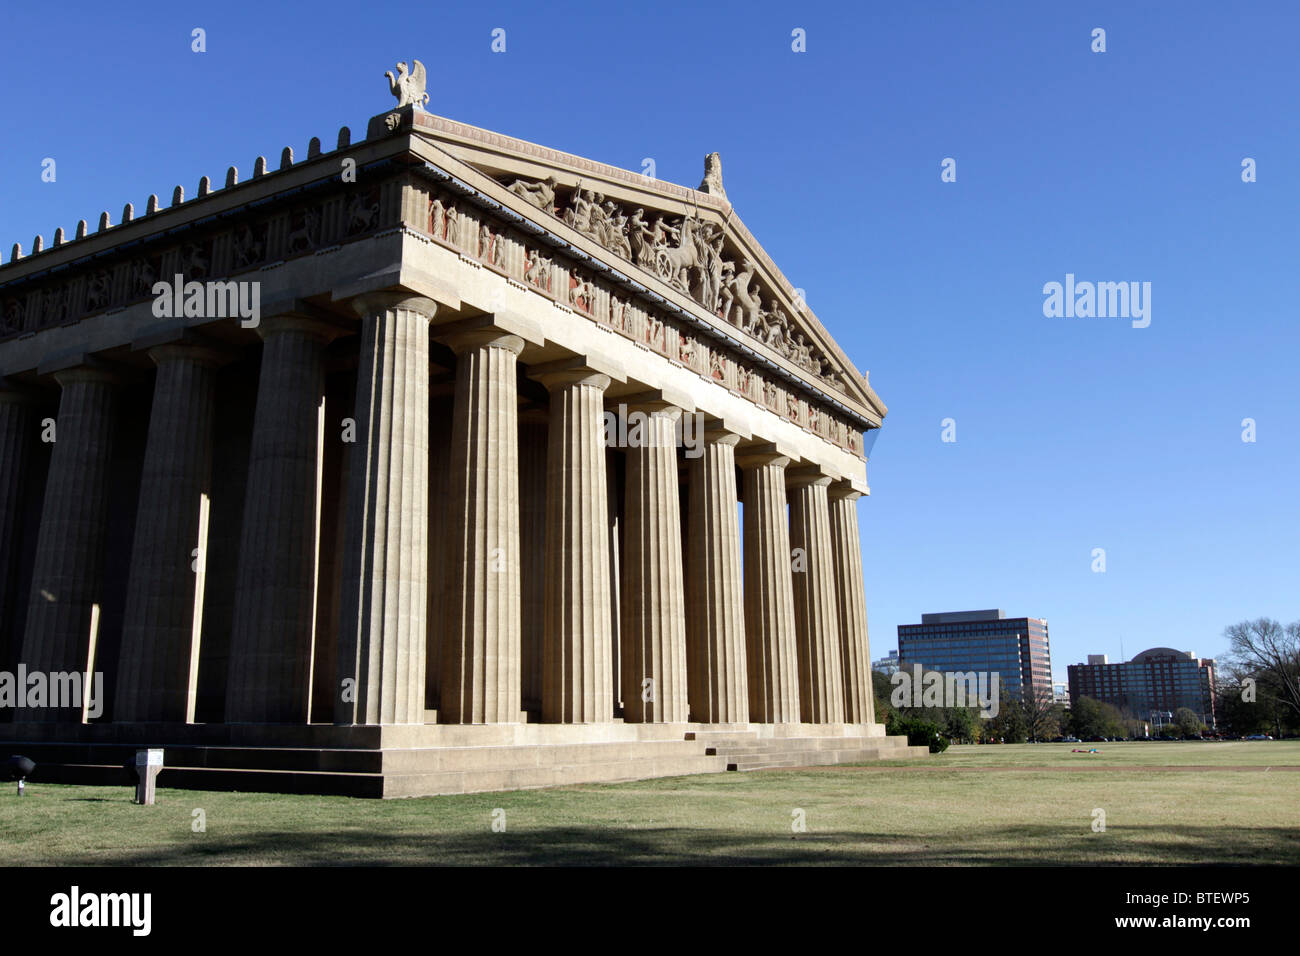 Historic Parthenon Temple replica built in Nashville in 1897 in Centennial Park, Nashville's premier urban park. Stock Photo